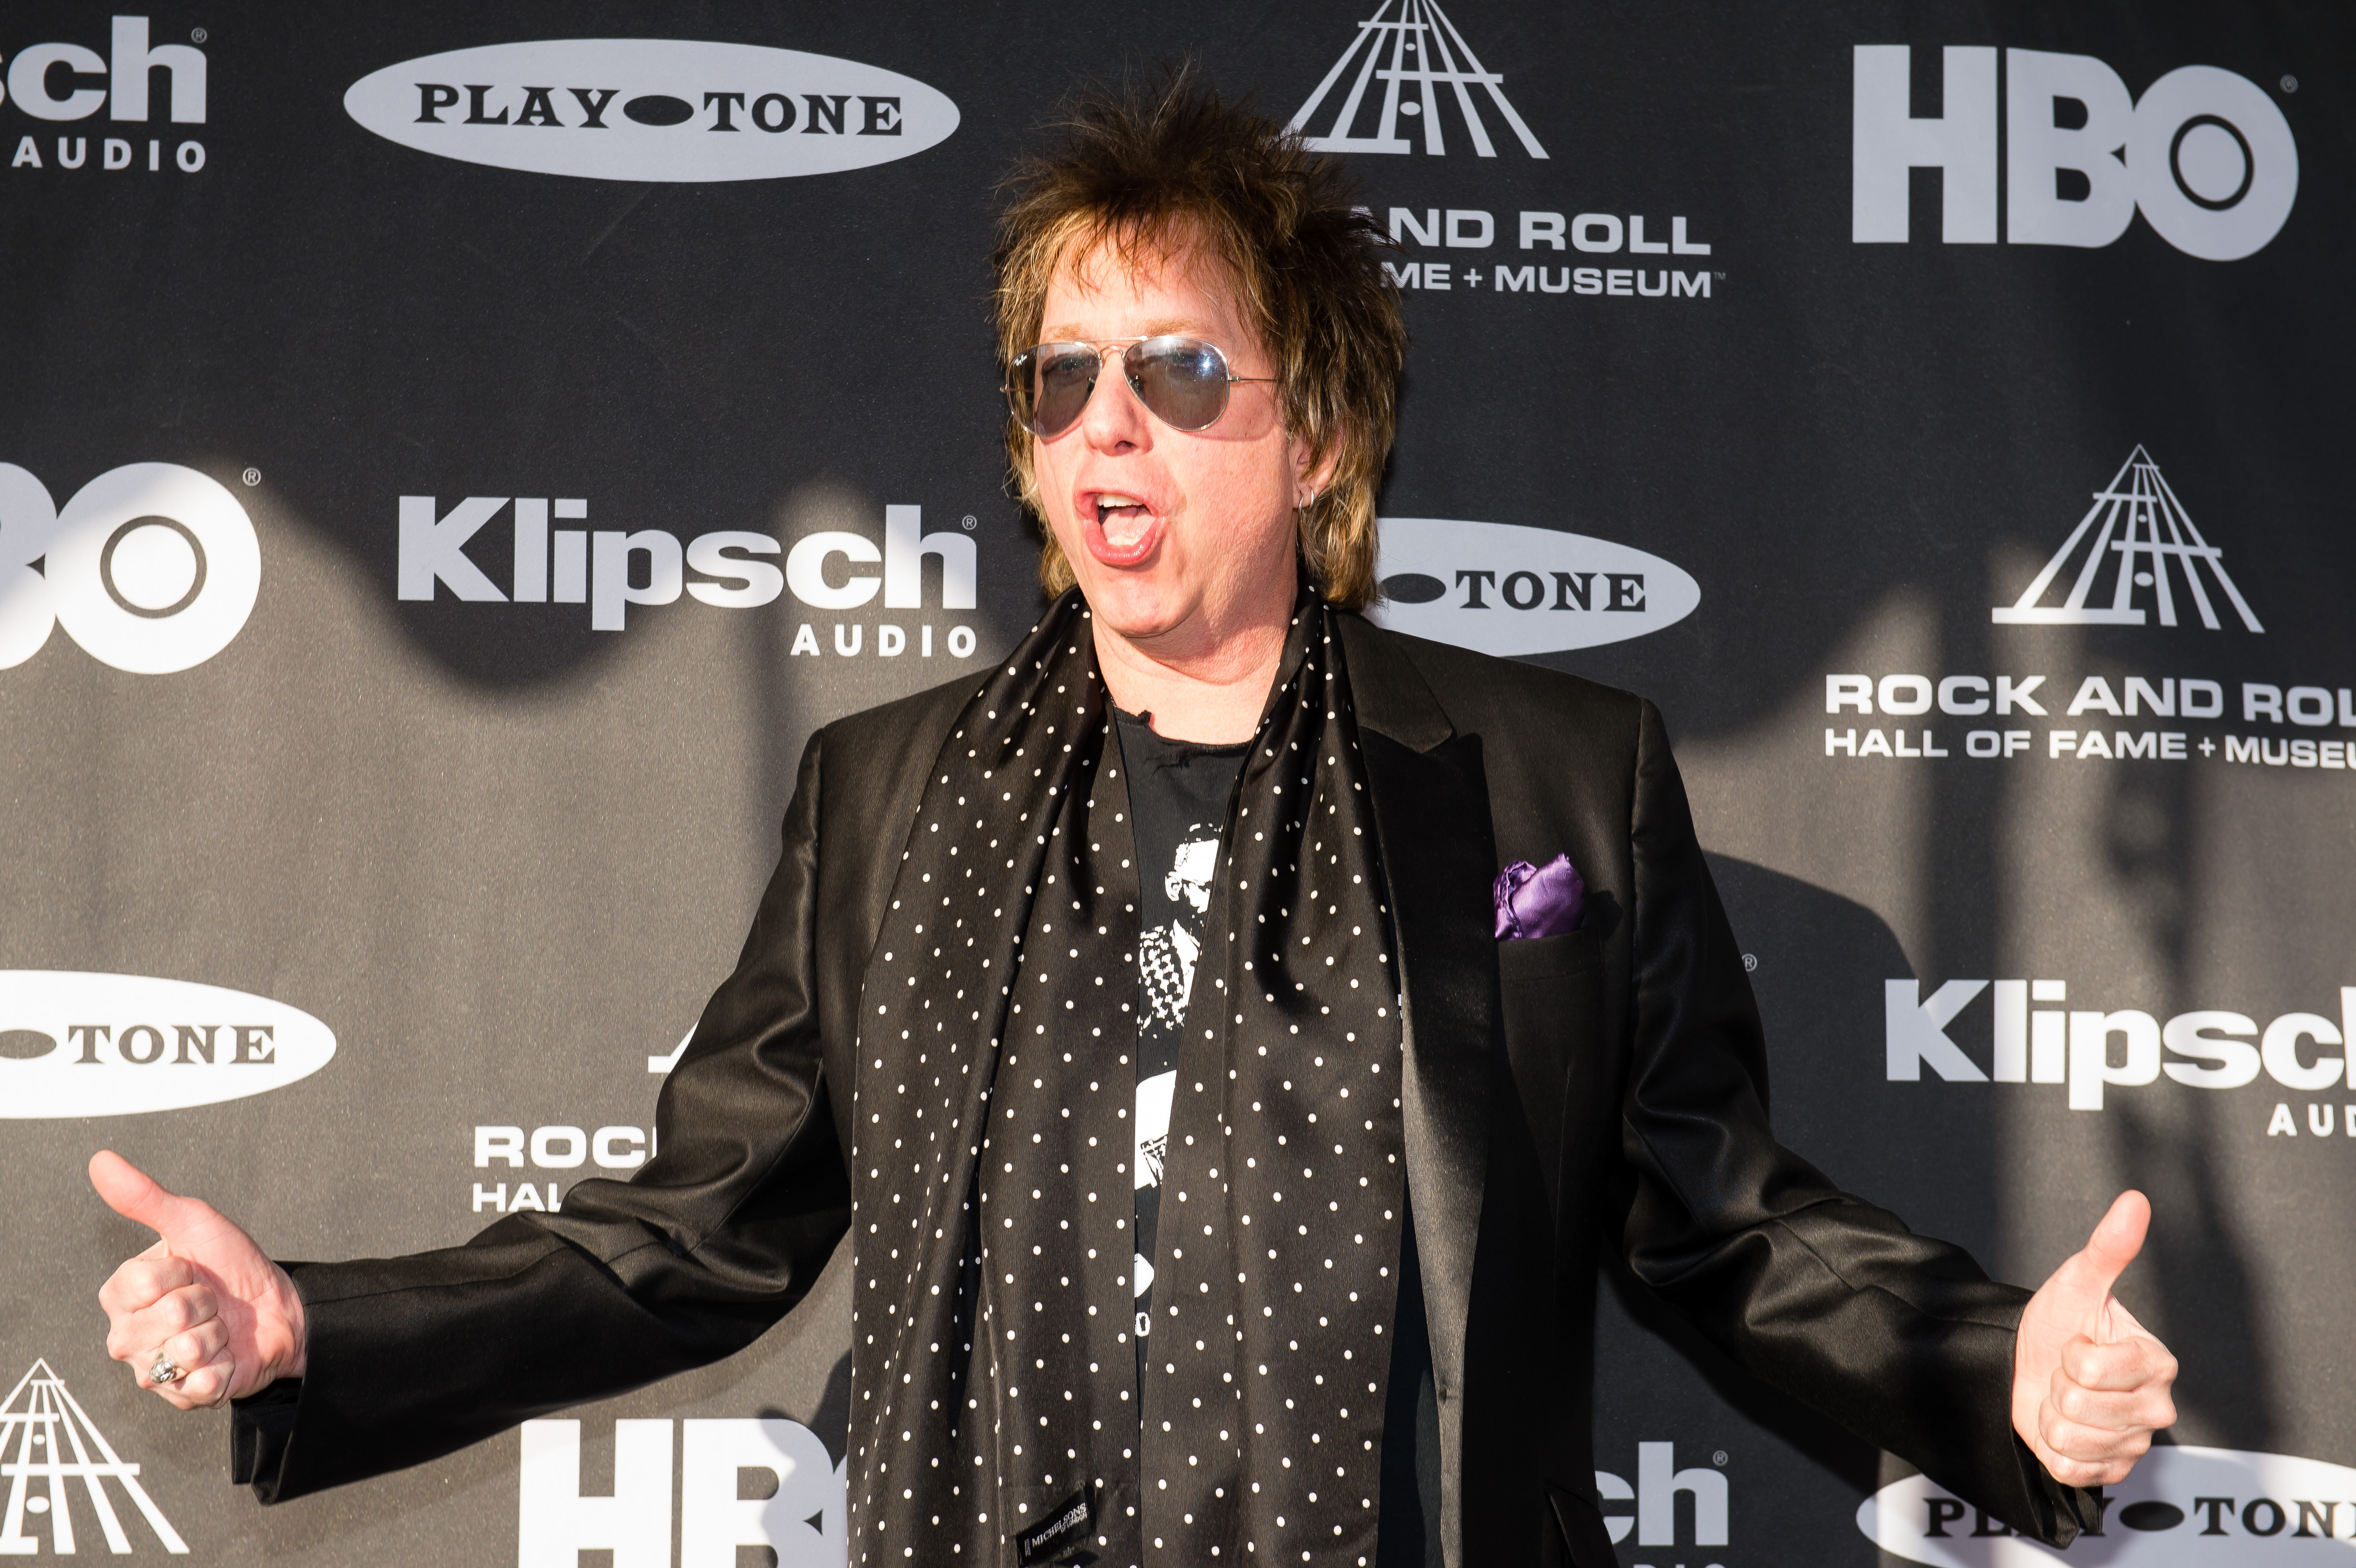 Rock Hall of Famer Ricky Byrd promotes Rock & Roll For Children online auction